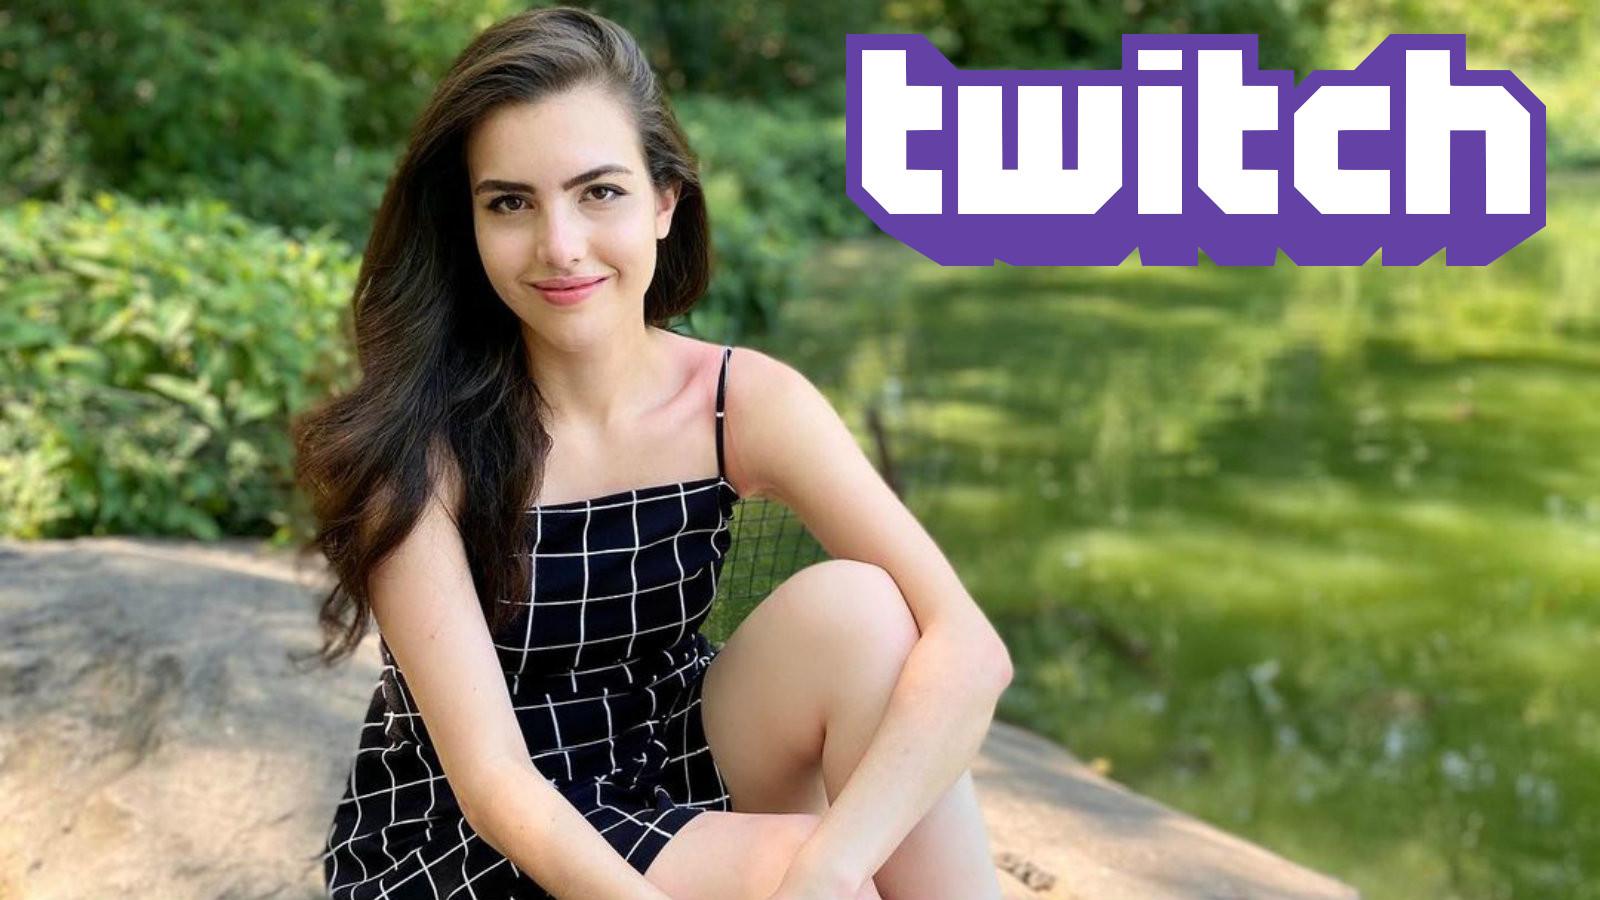 Alexandra Botez accidentally goes live on Twitch while making thumbnail  faces - Dexerto